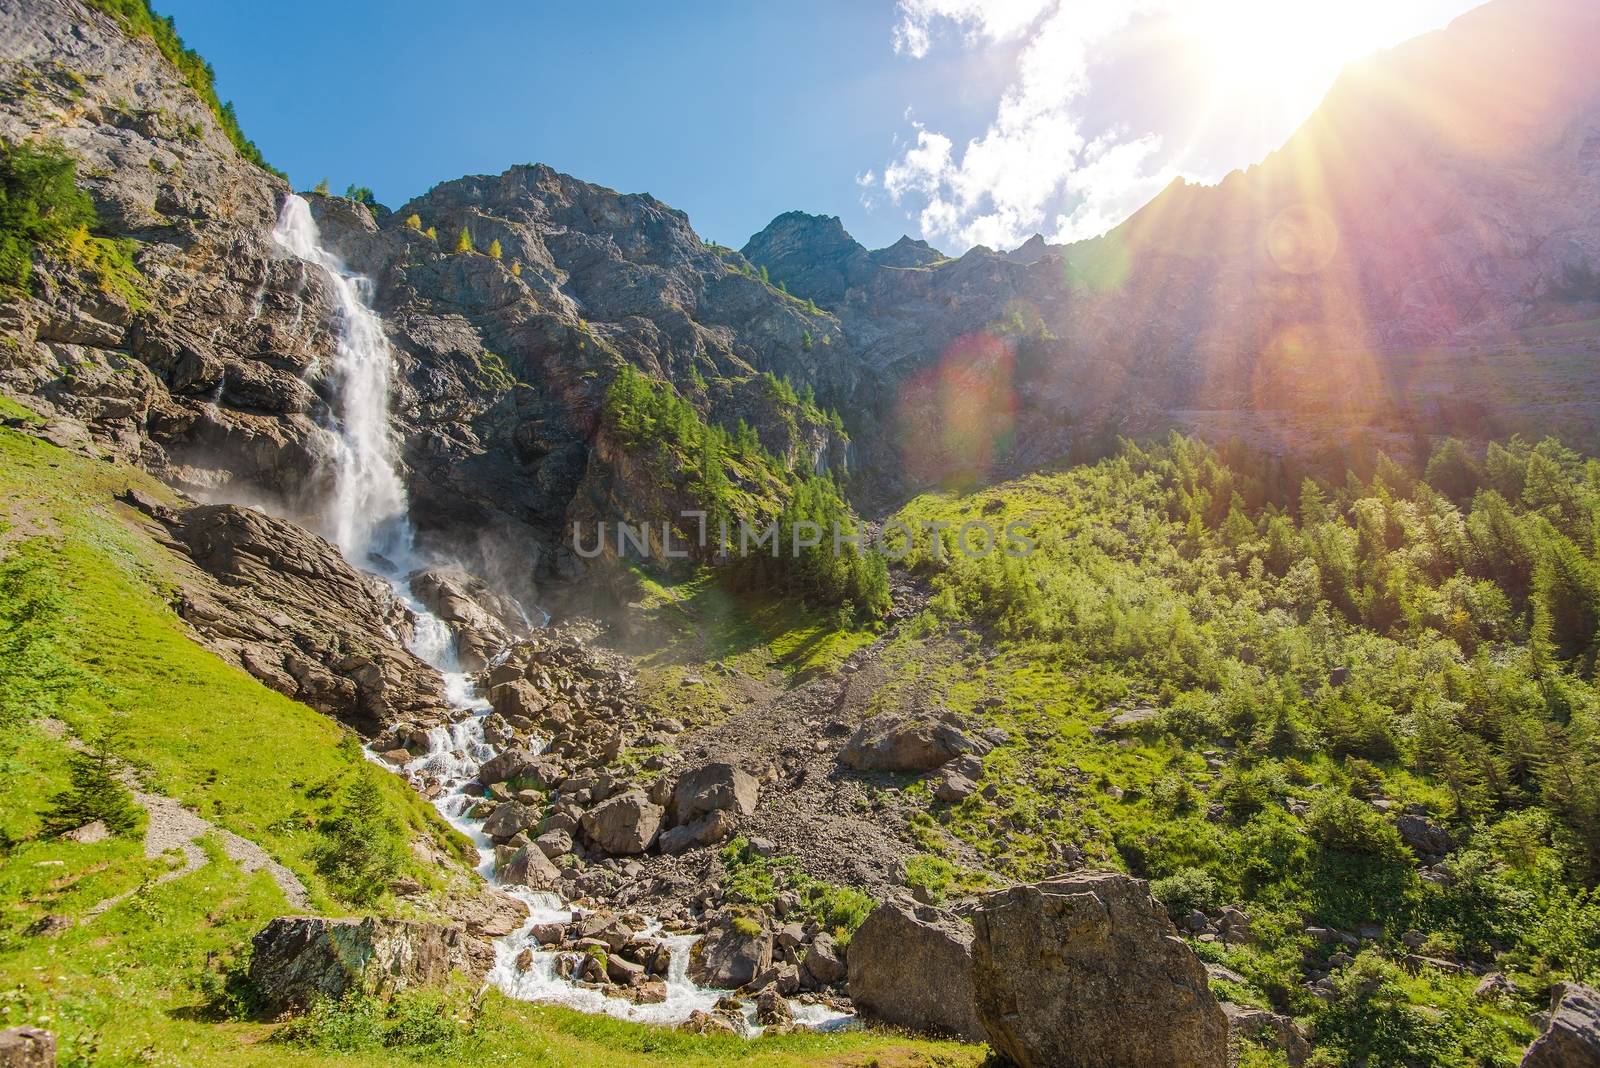 Adelboden Waterfalls Summer Time Scenery. Adelboden, Switzerland, Europe. Swiss Alps.